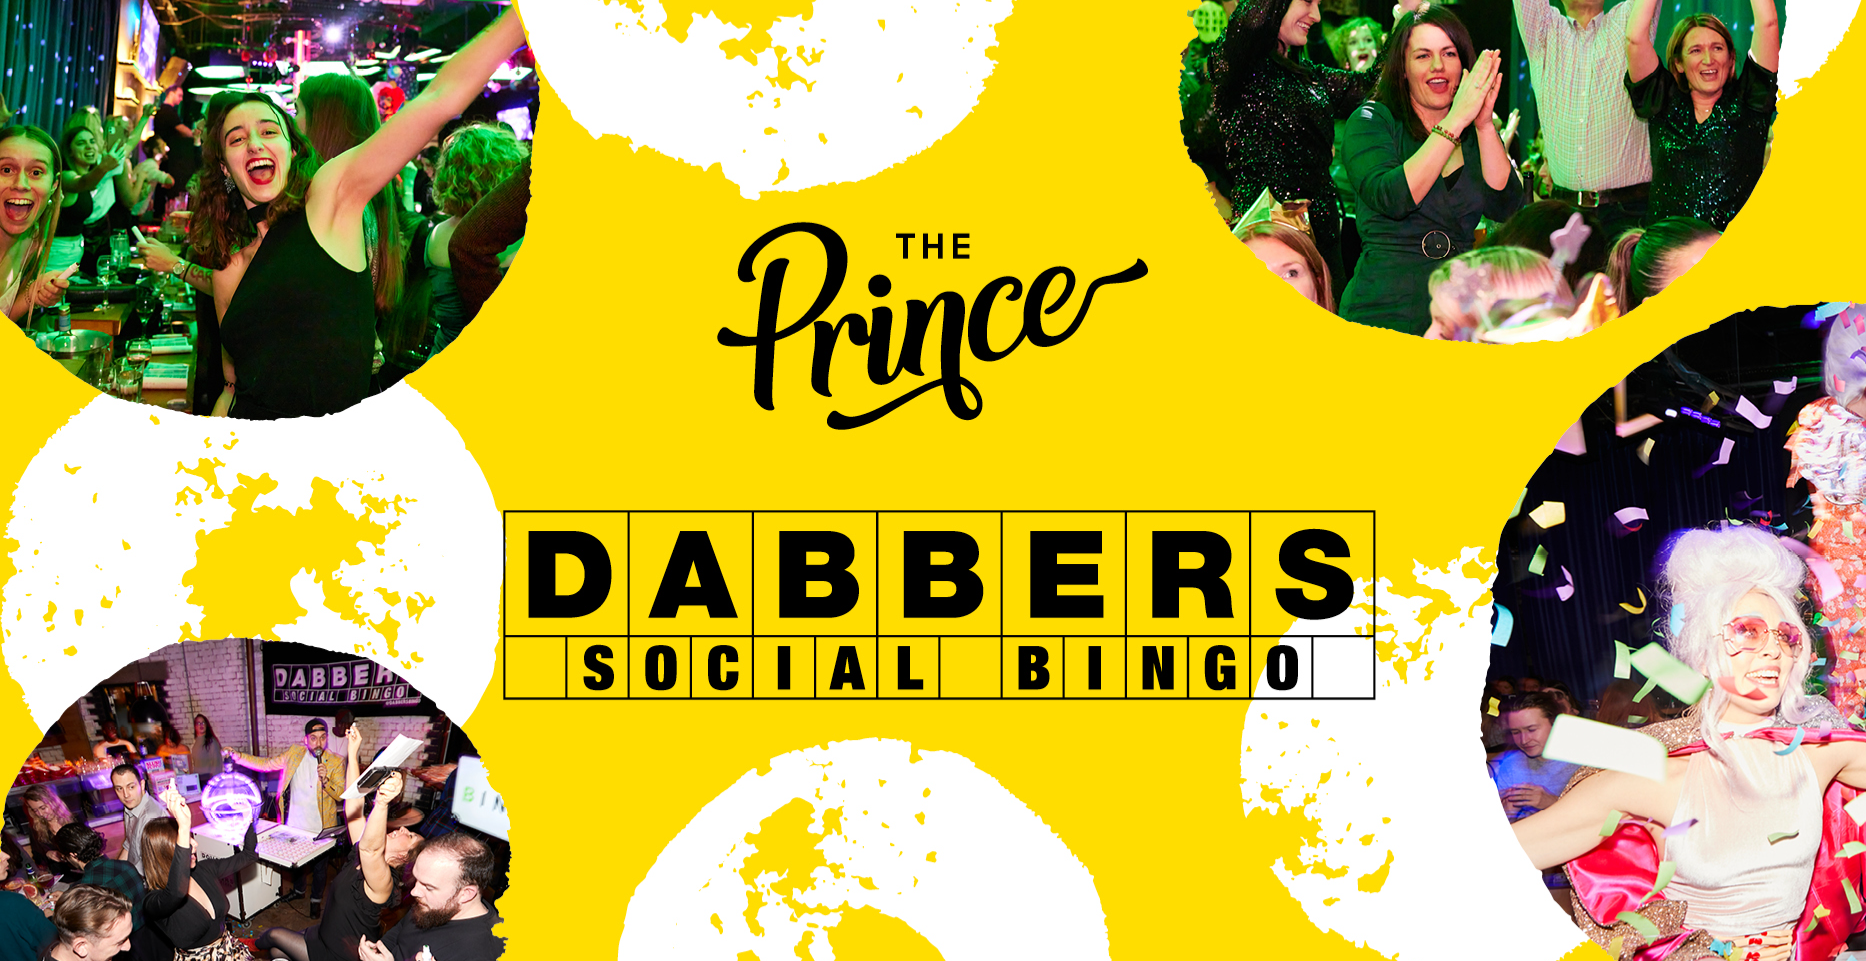 Dabbers Bingo at The Prince